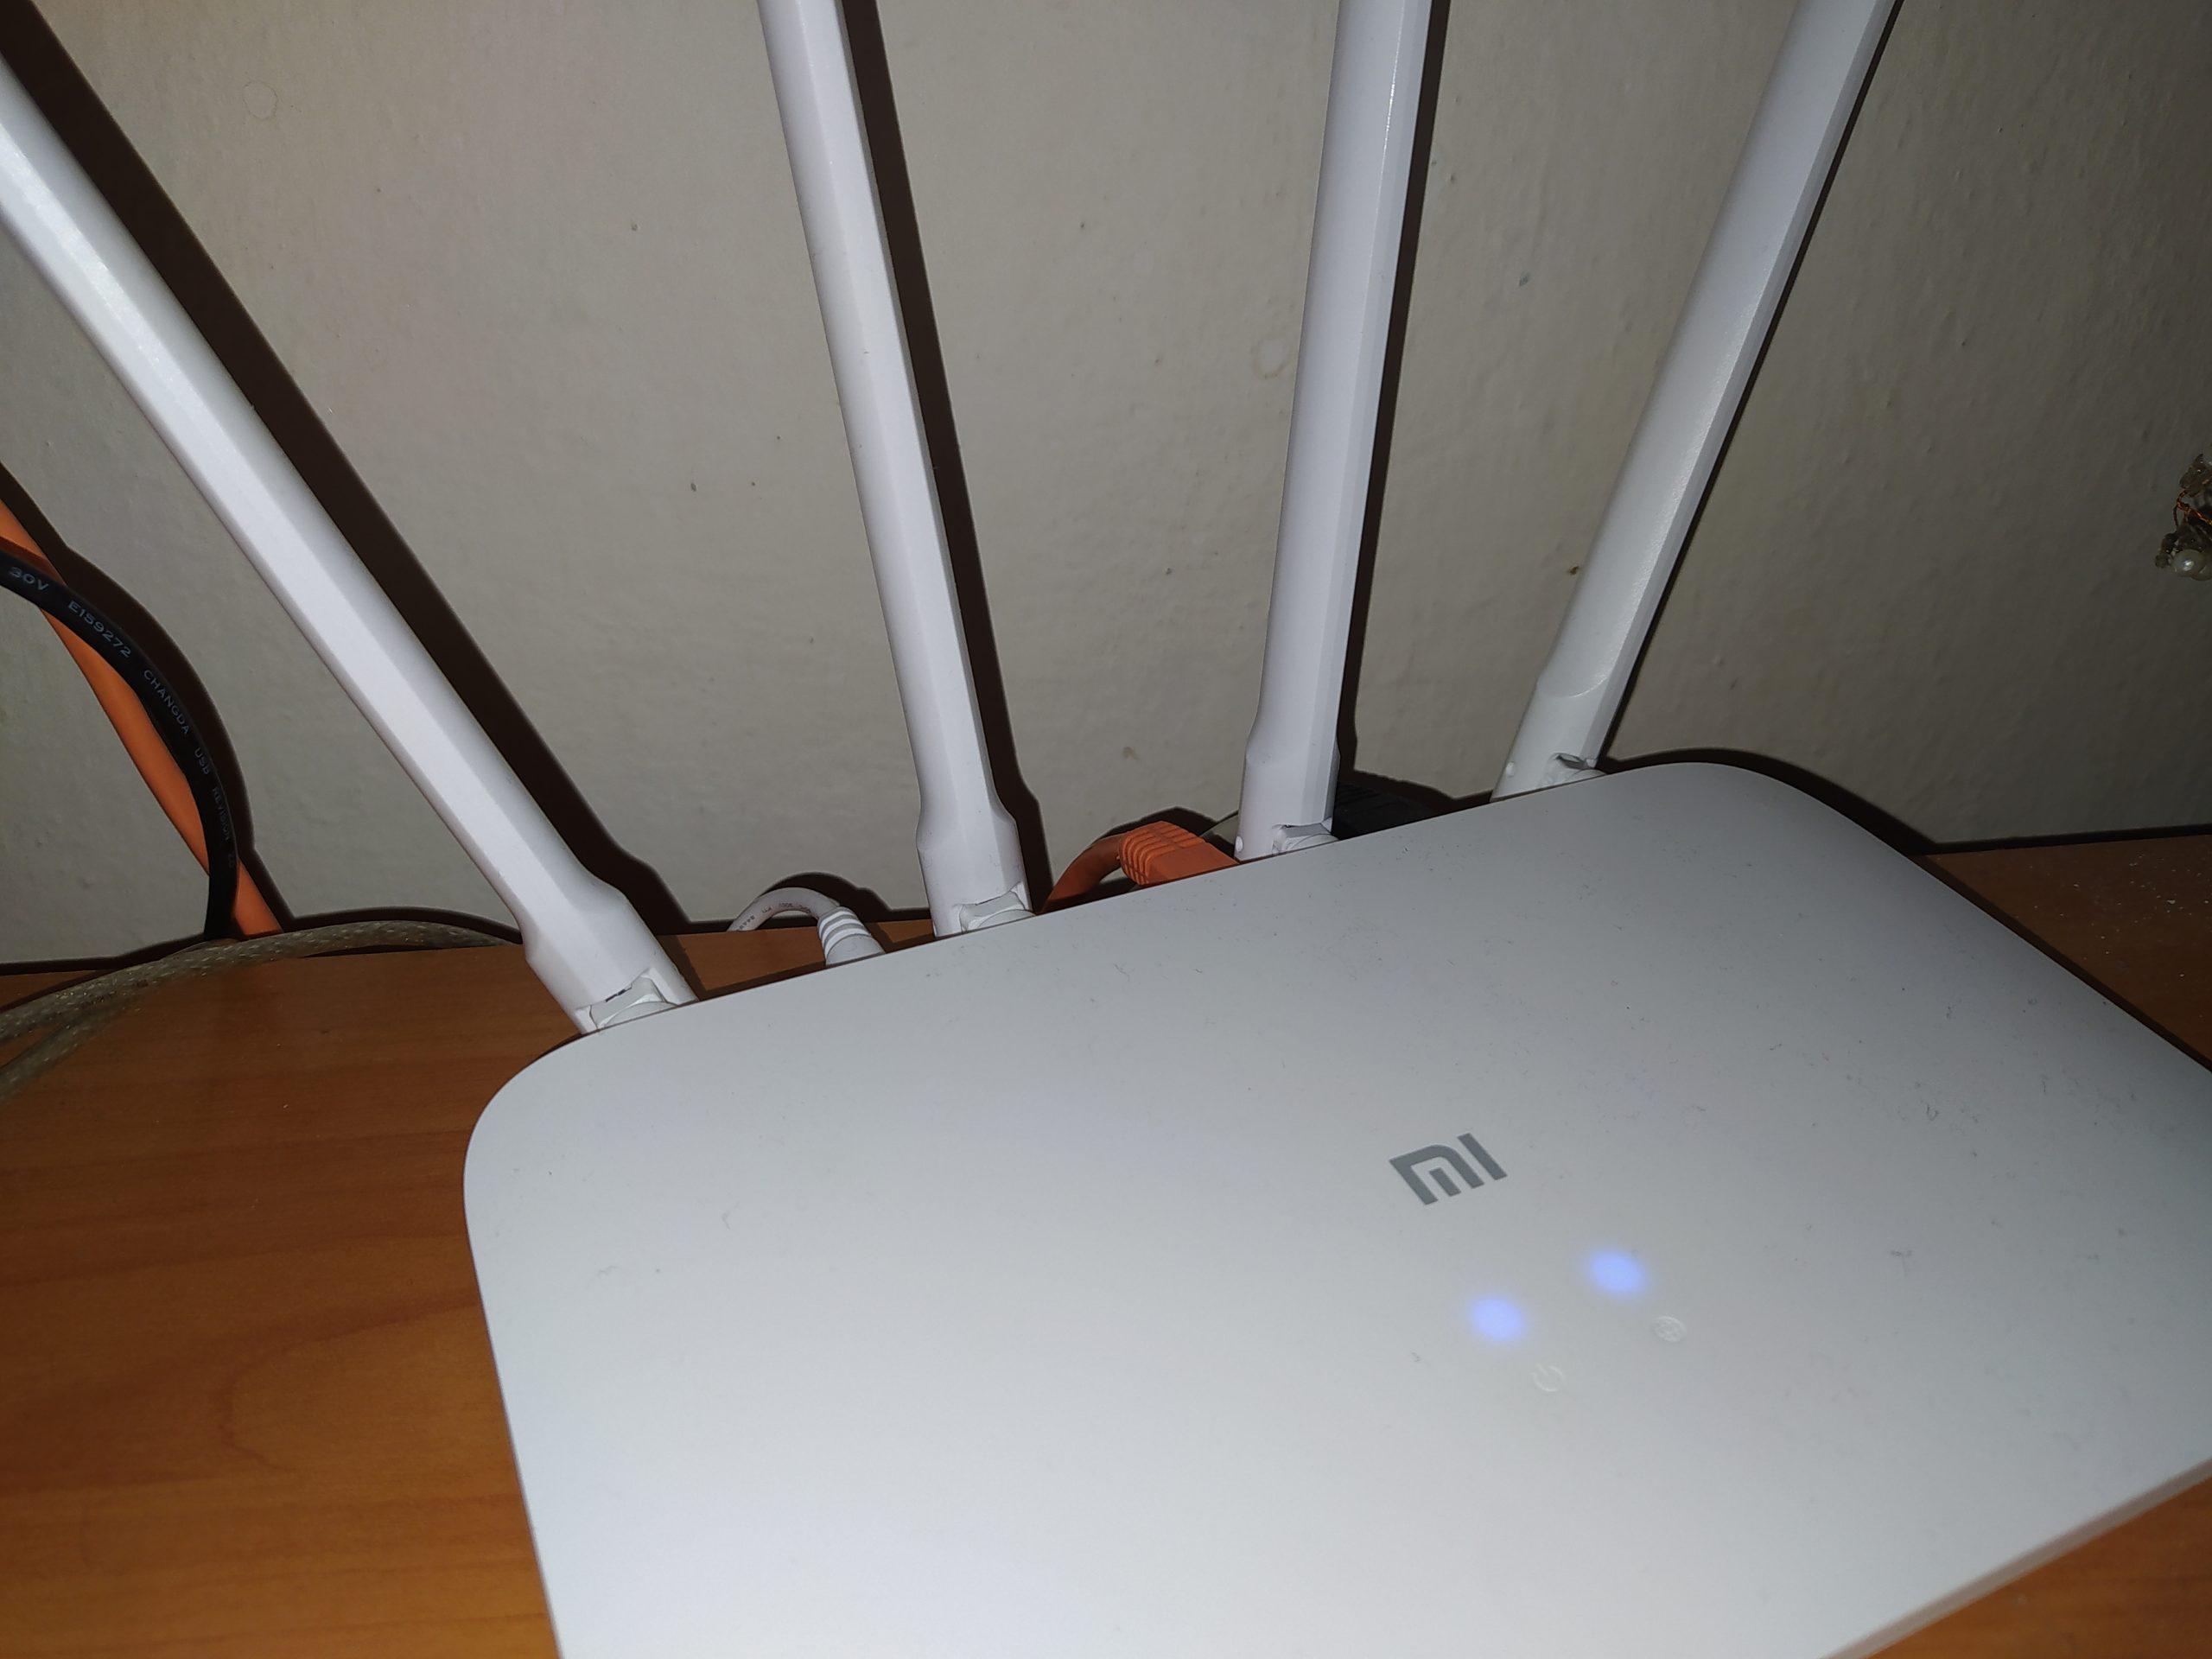 Mi wifi router 4a gigabit